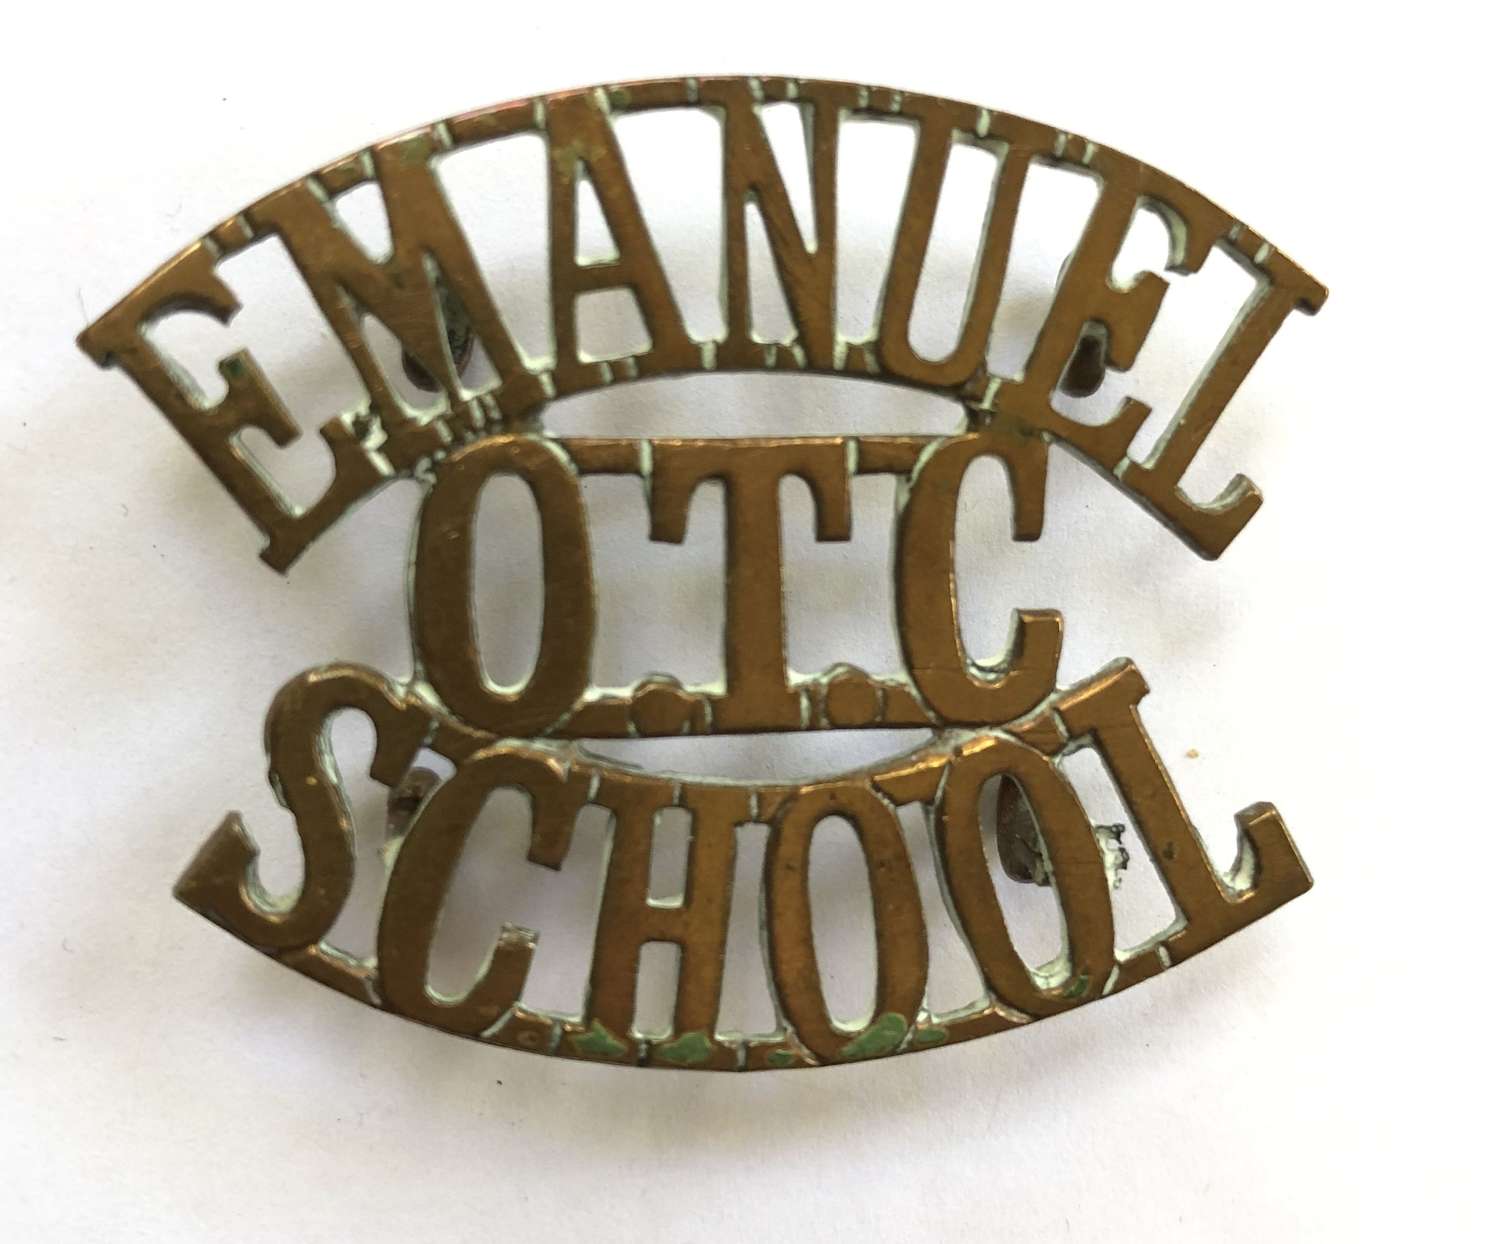 EMANUEL / OTC / SCHOOL London shoulder title circa 1908-40